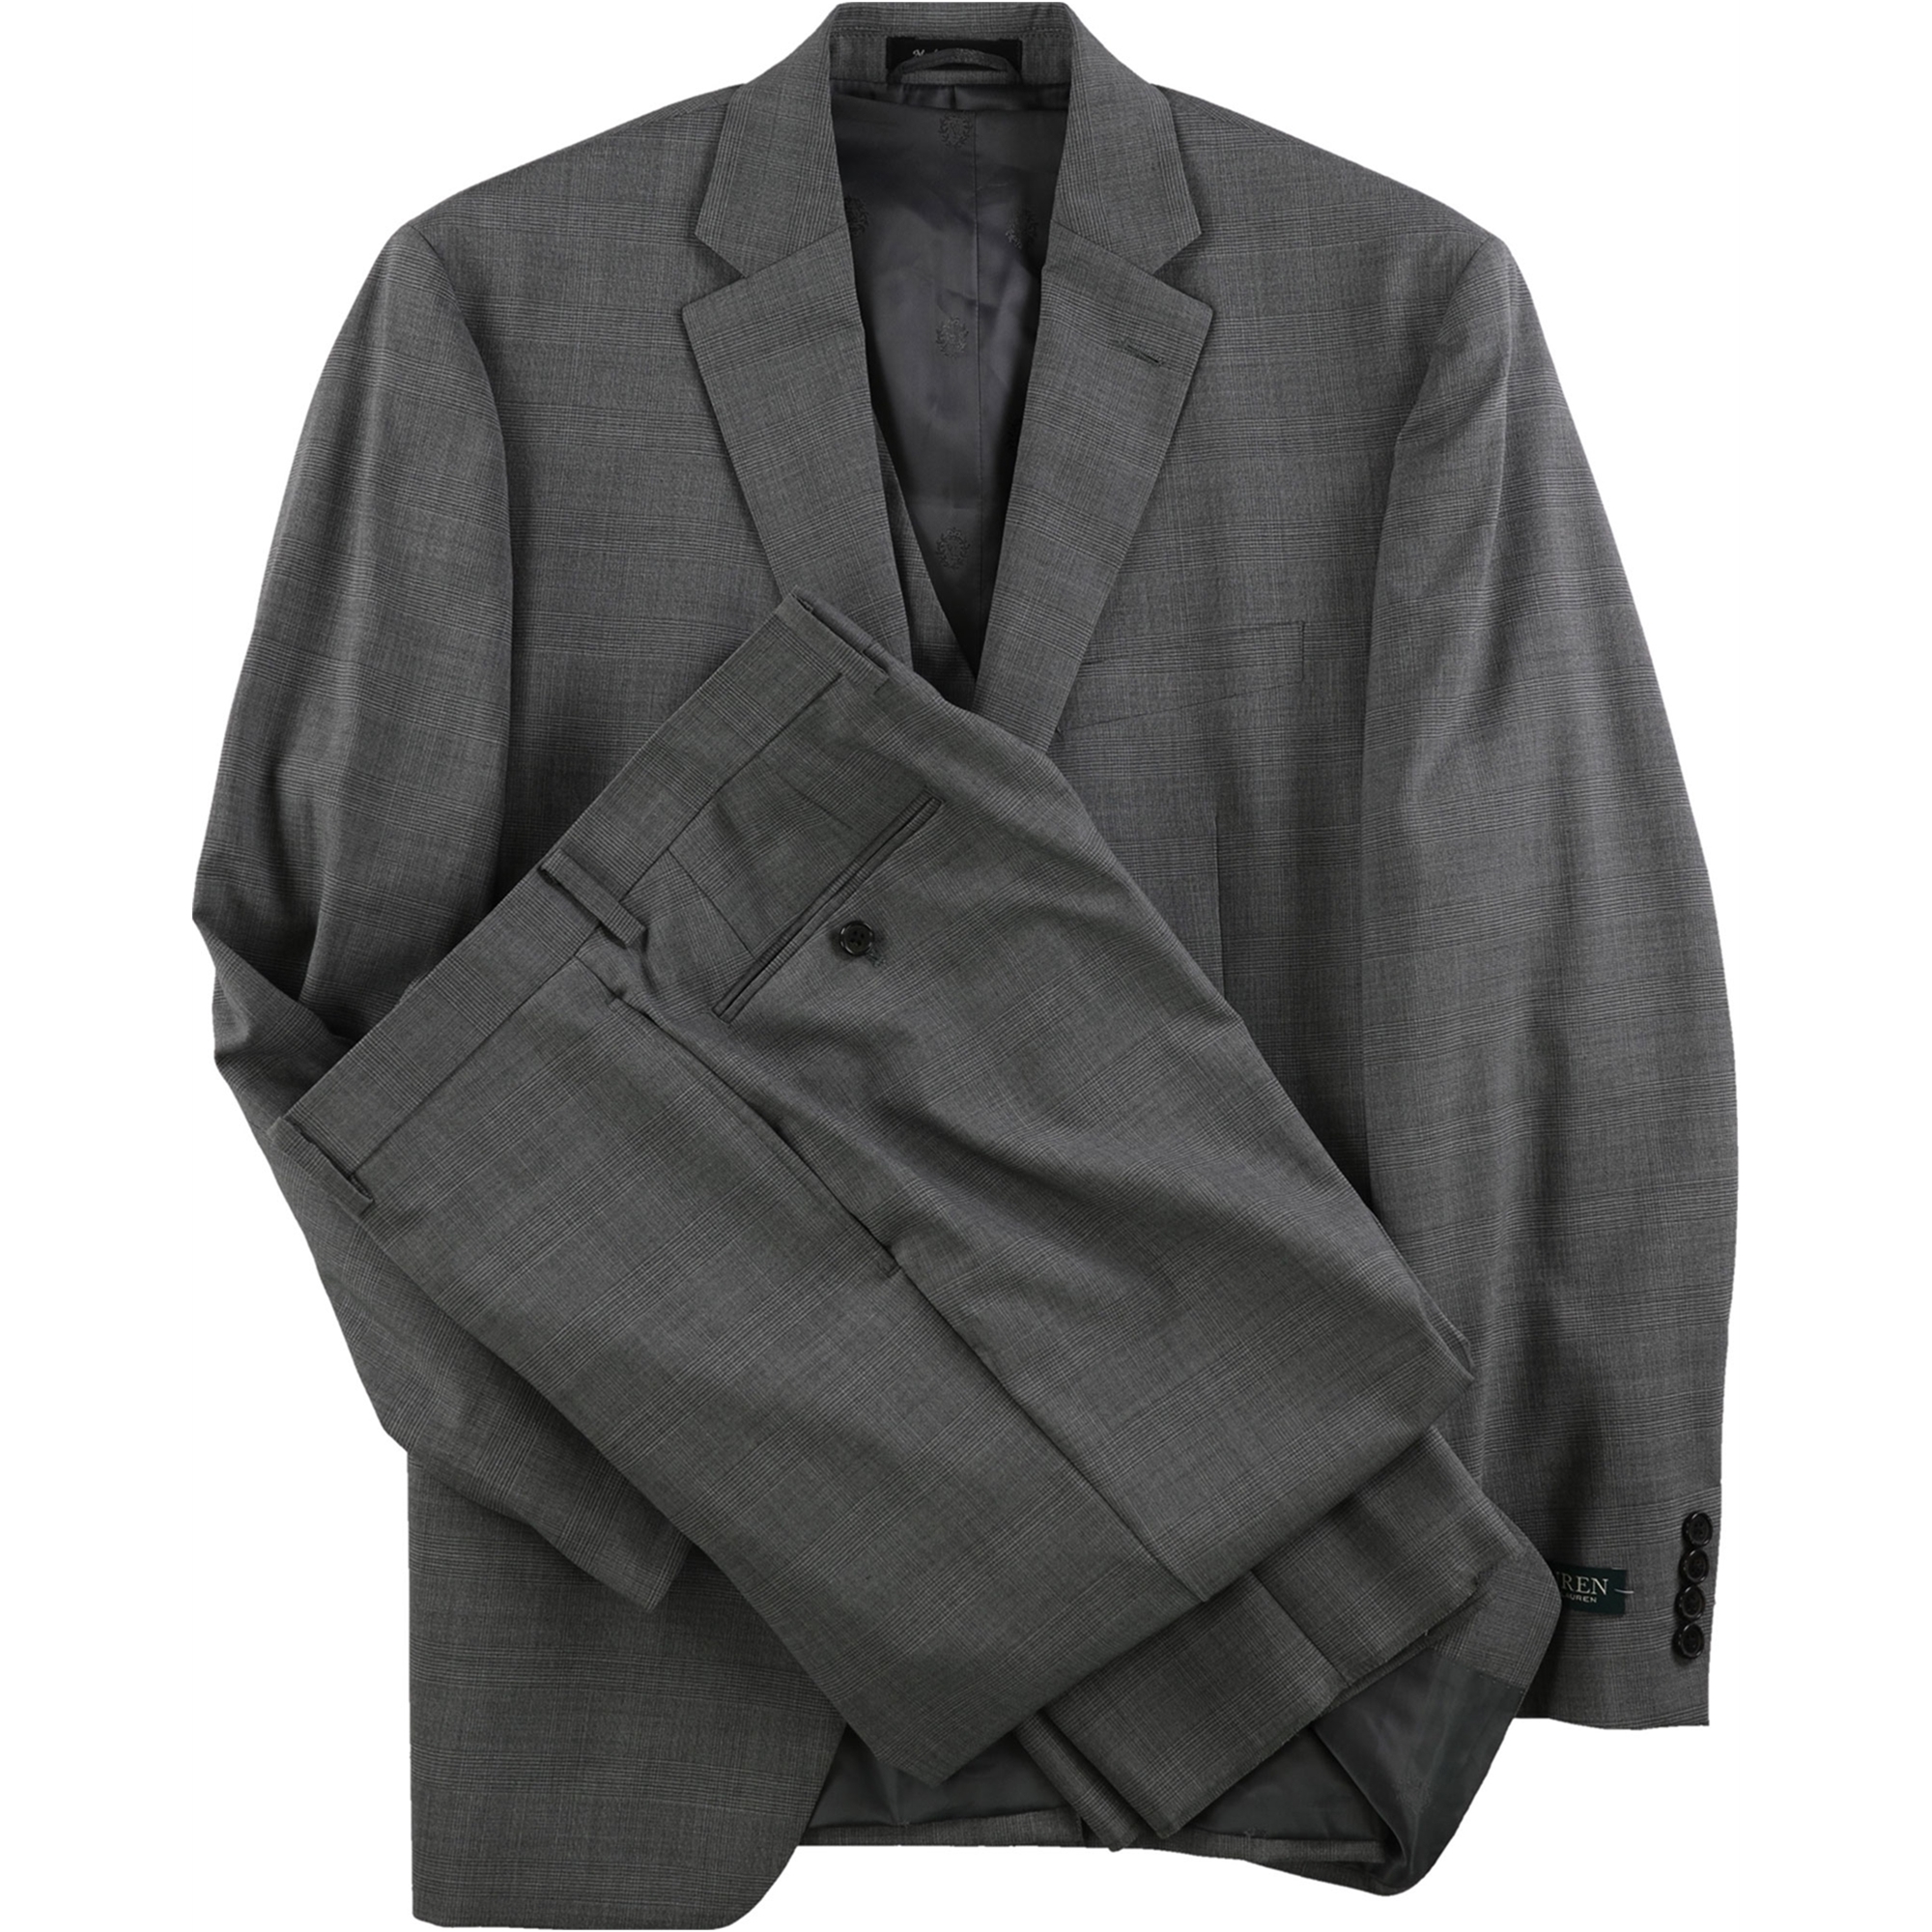 Ralph Lauren Mens Plaid Two Button Formal Suit lightgrey 40/Unfinished - image 1 of 2